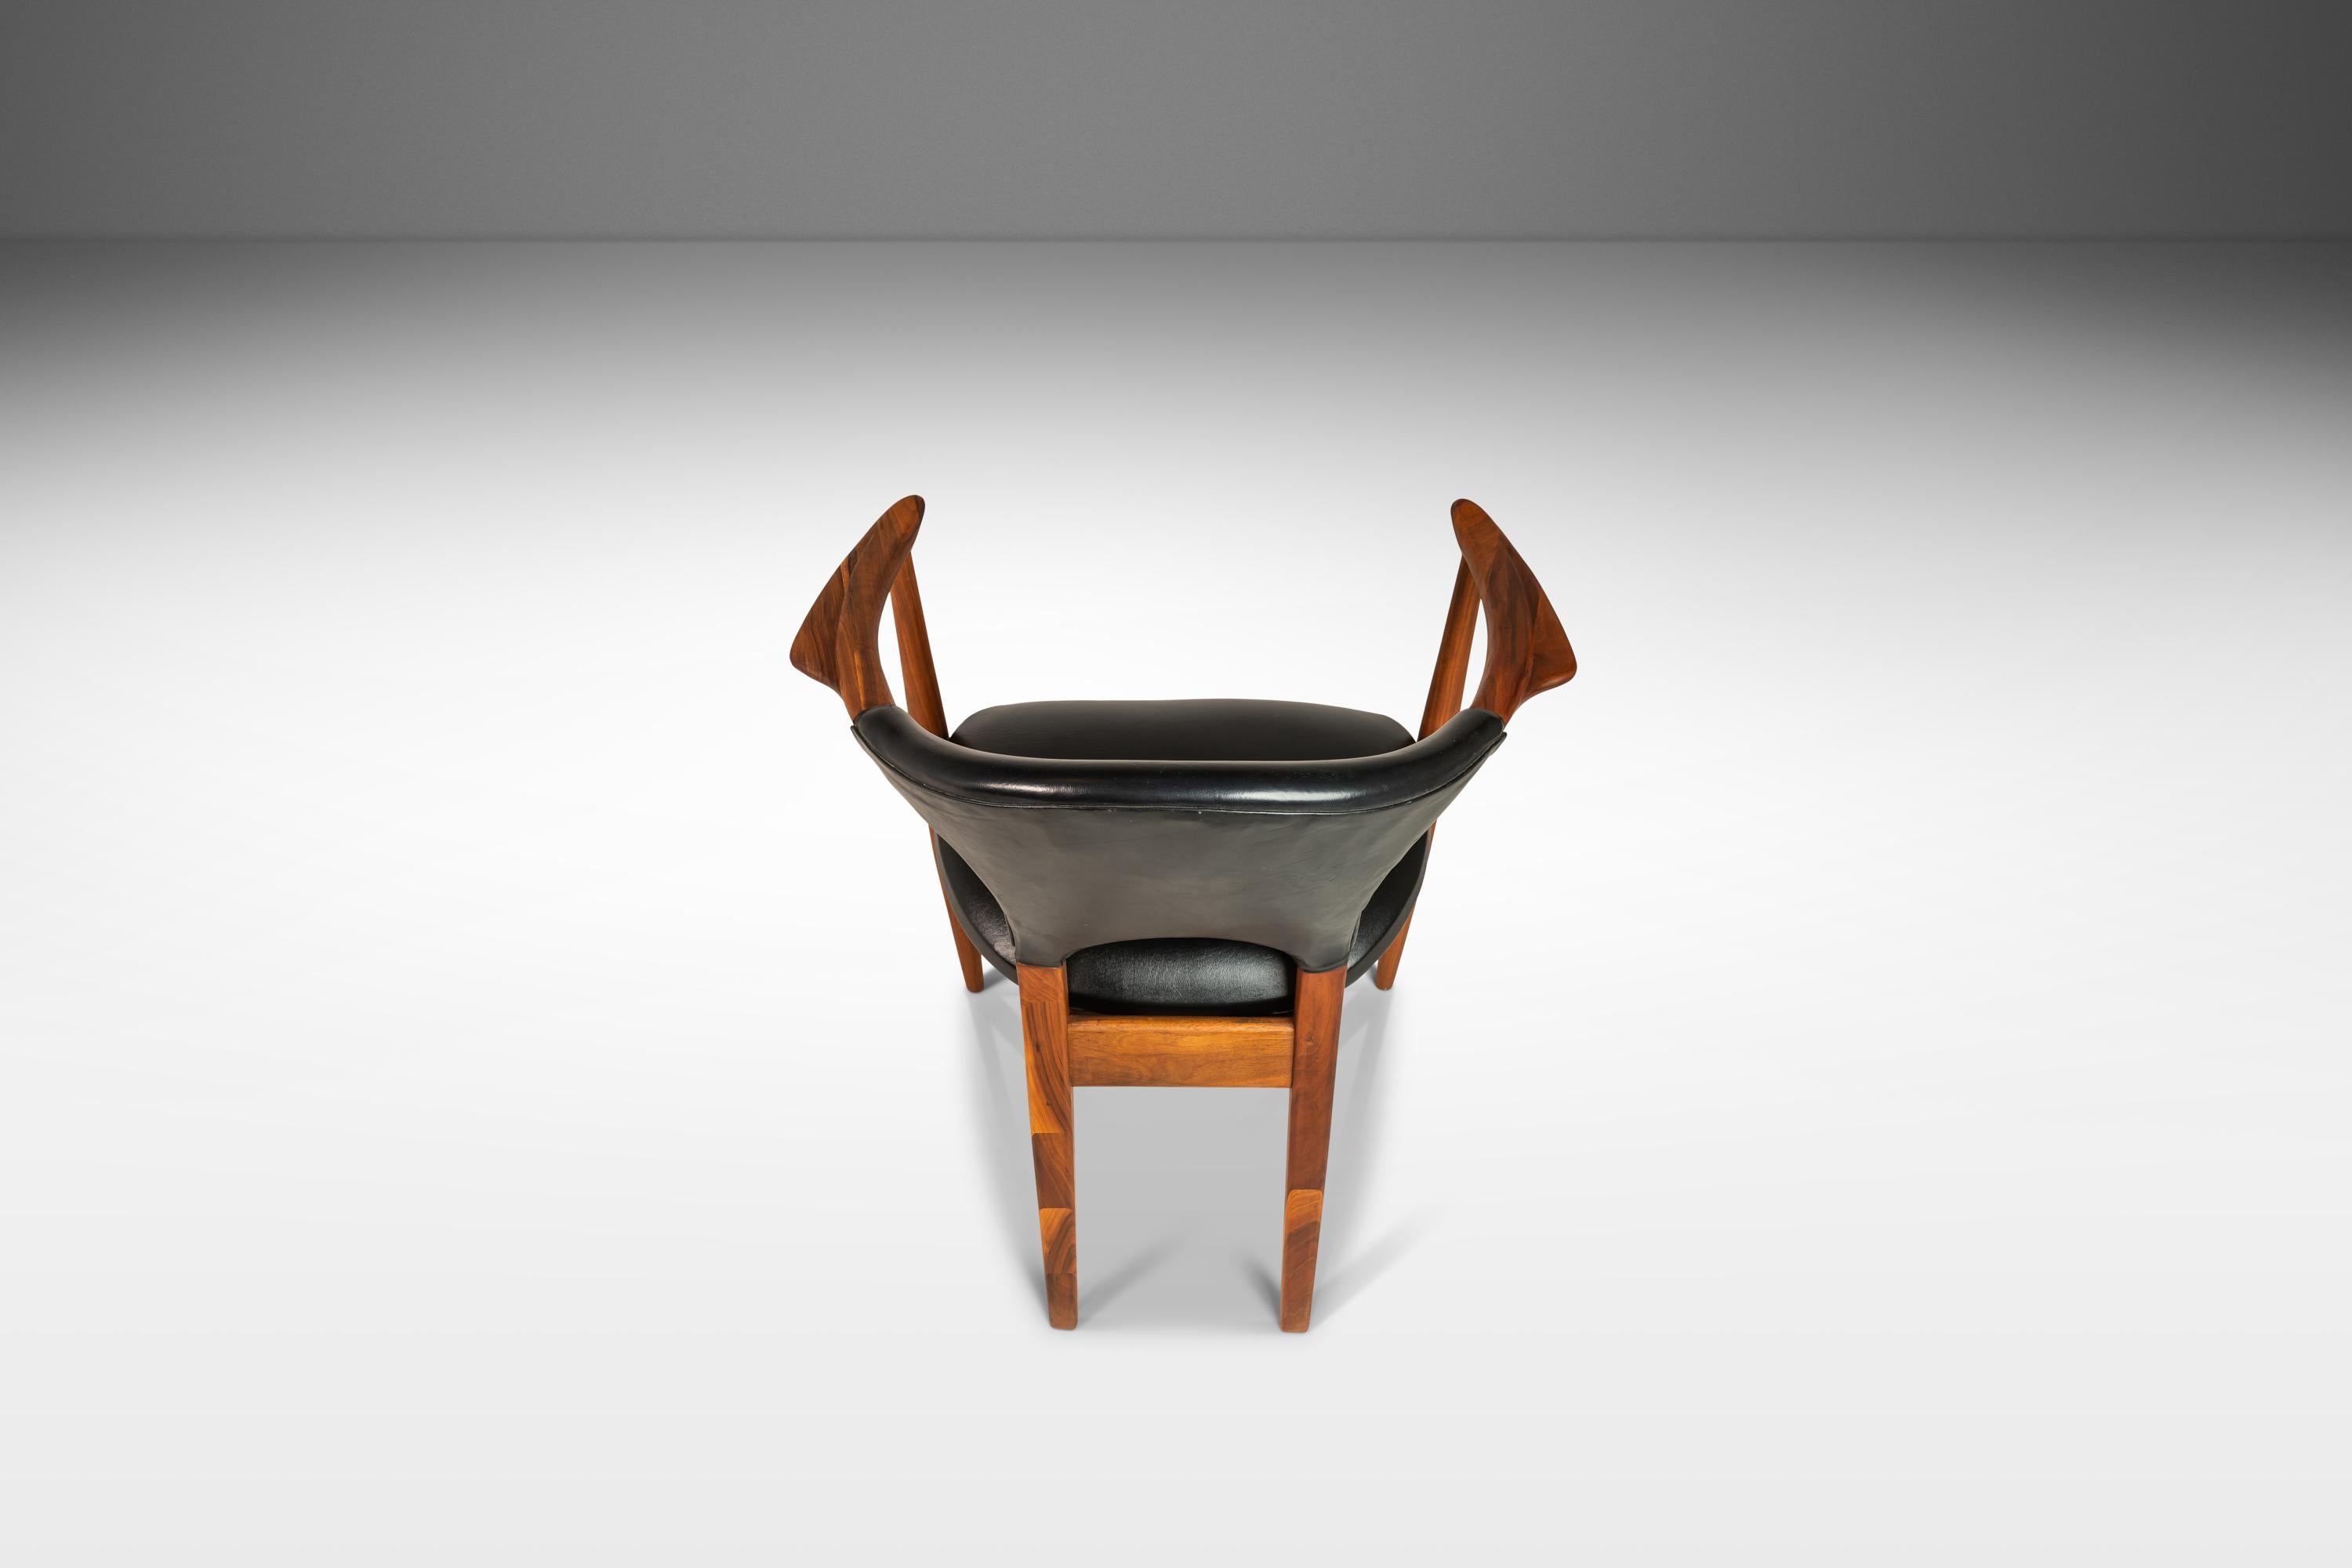 Angular Danish Mid Century Modern Armchair in Solid Walnut, Denmark, c. 1960's For Sale 7